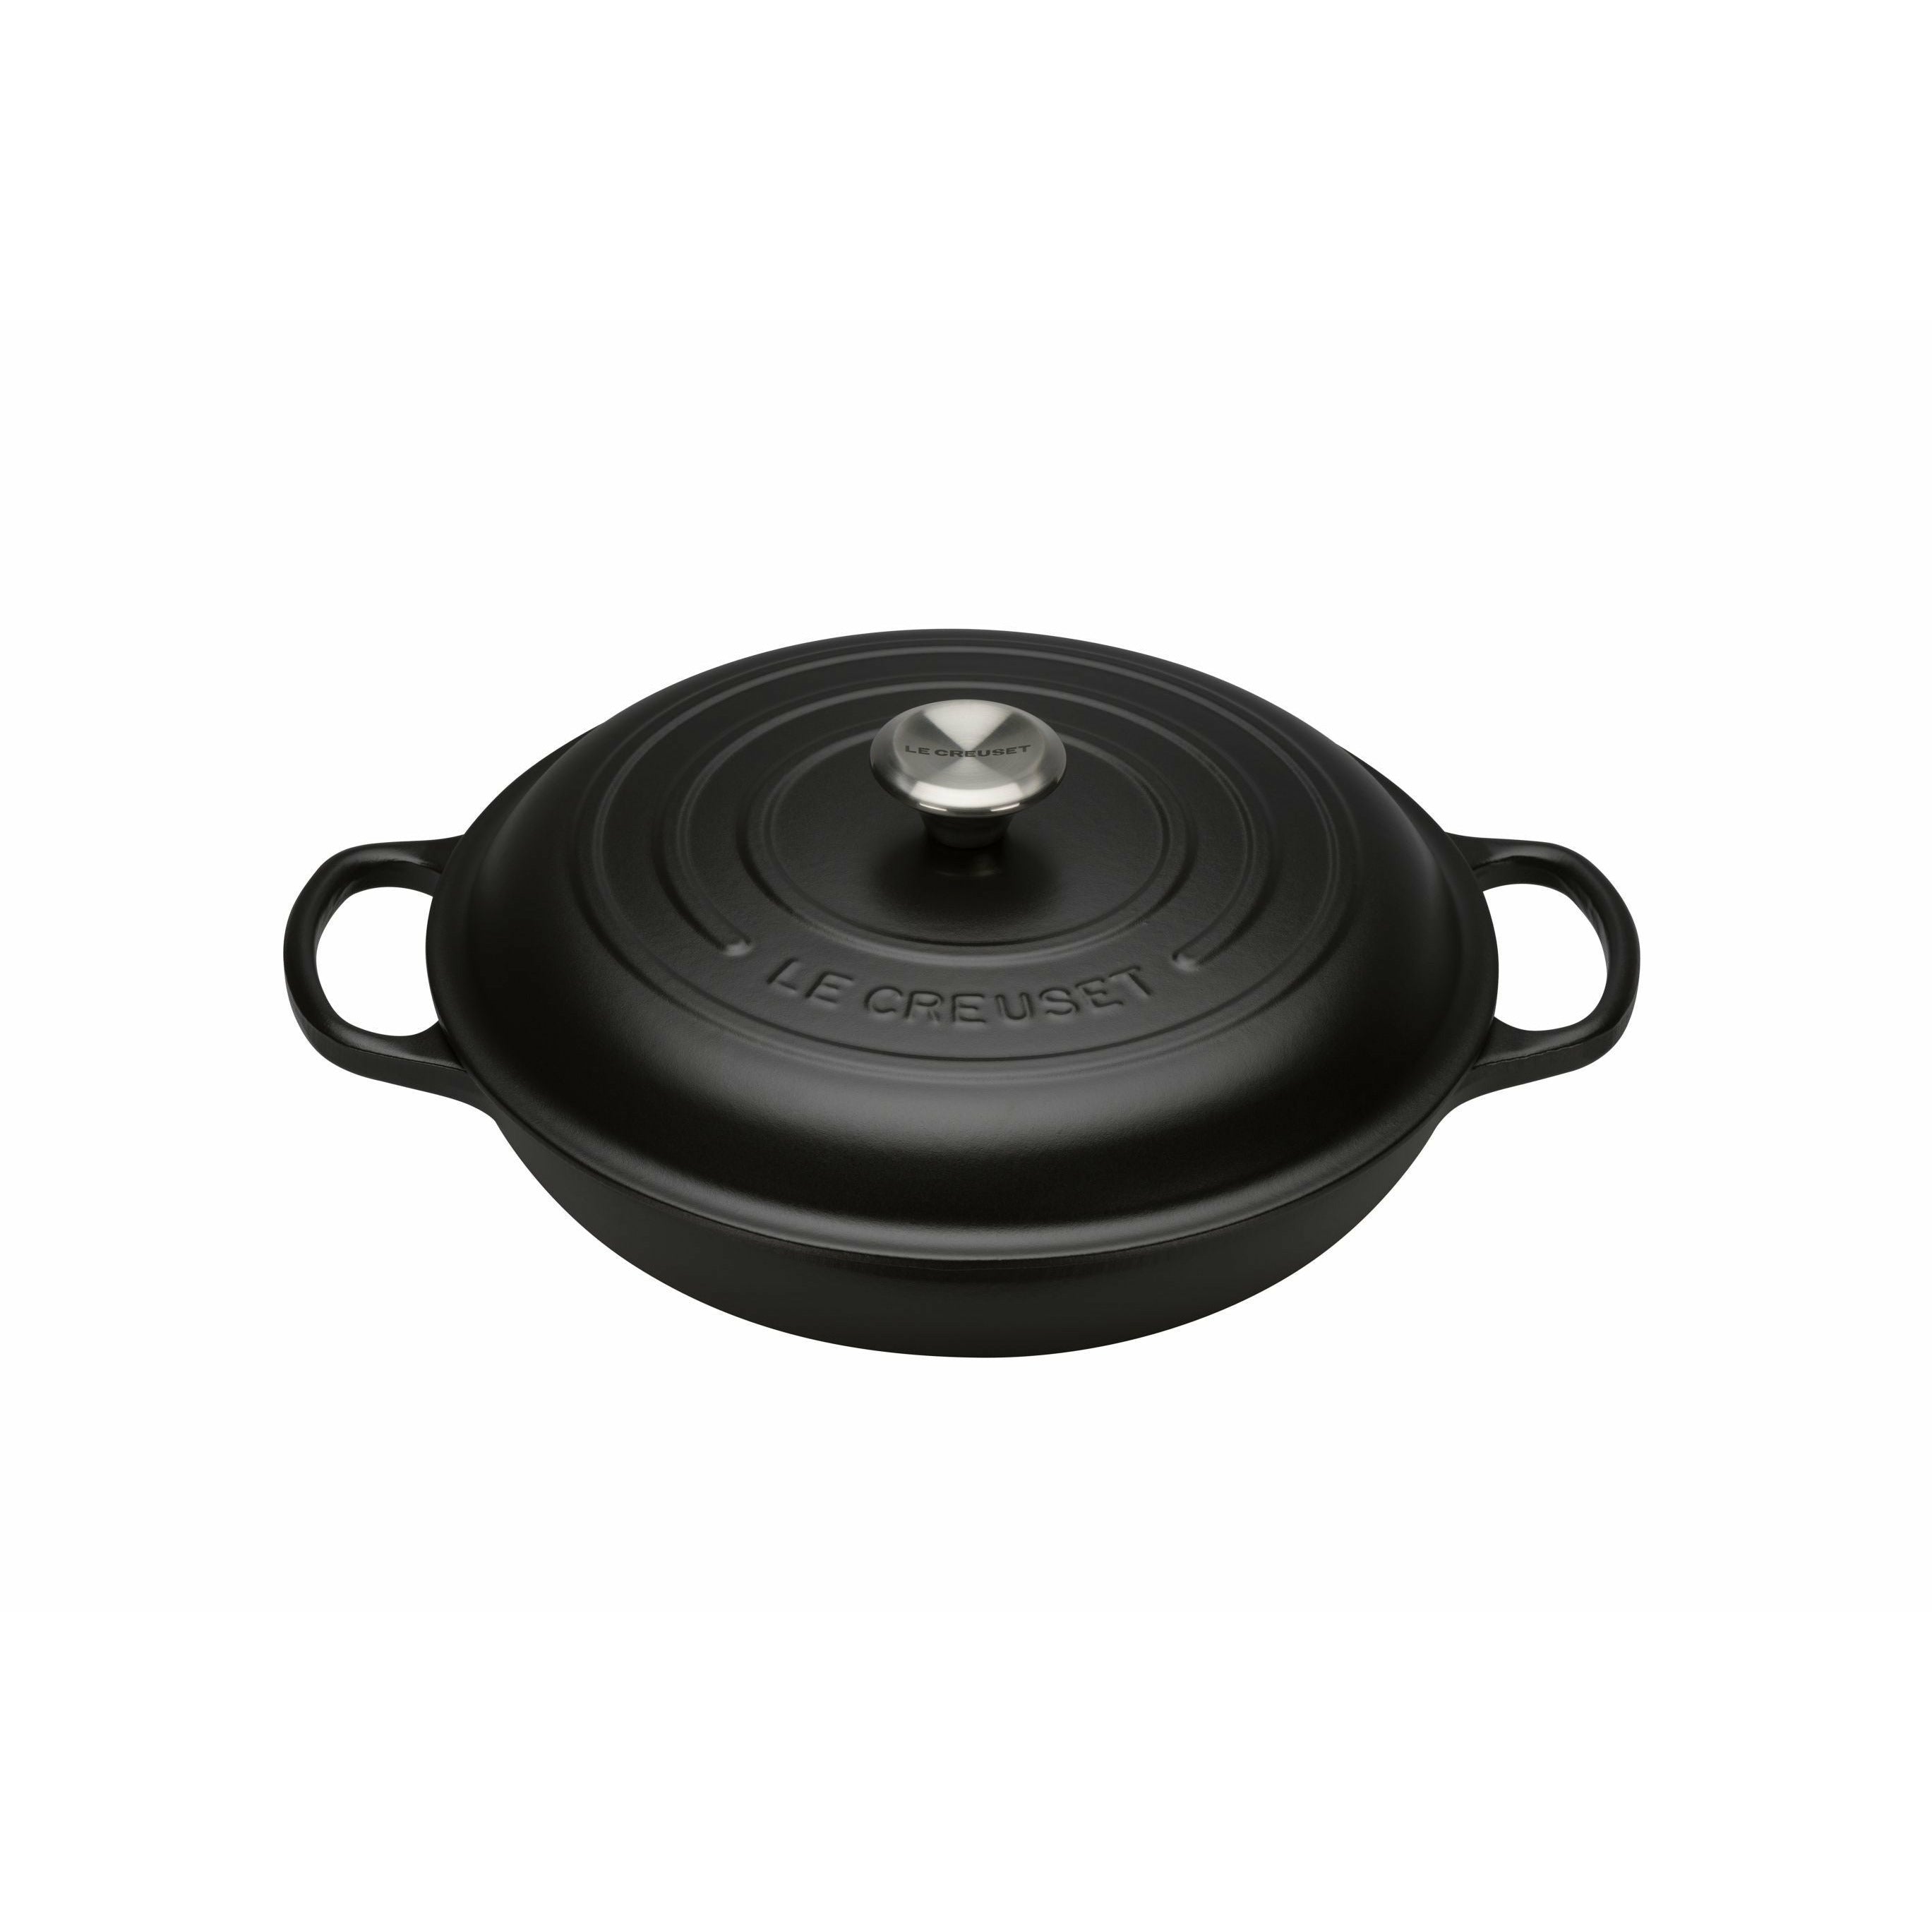 Le Creuset Signature Gourmet Professional Pot met zwart binnenglazuur 30 cm, zwart